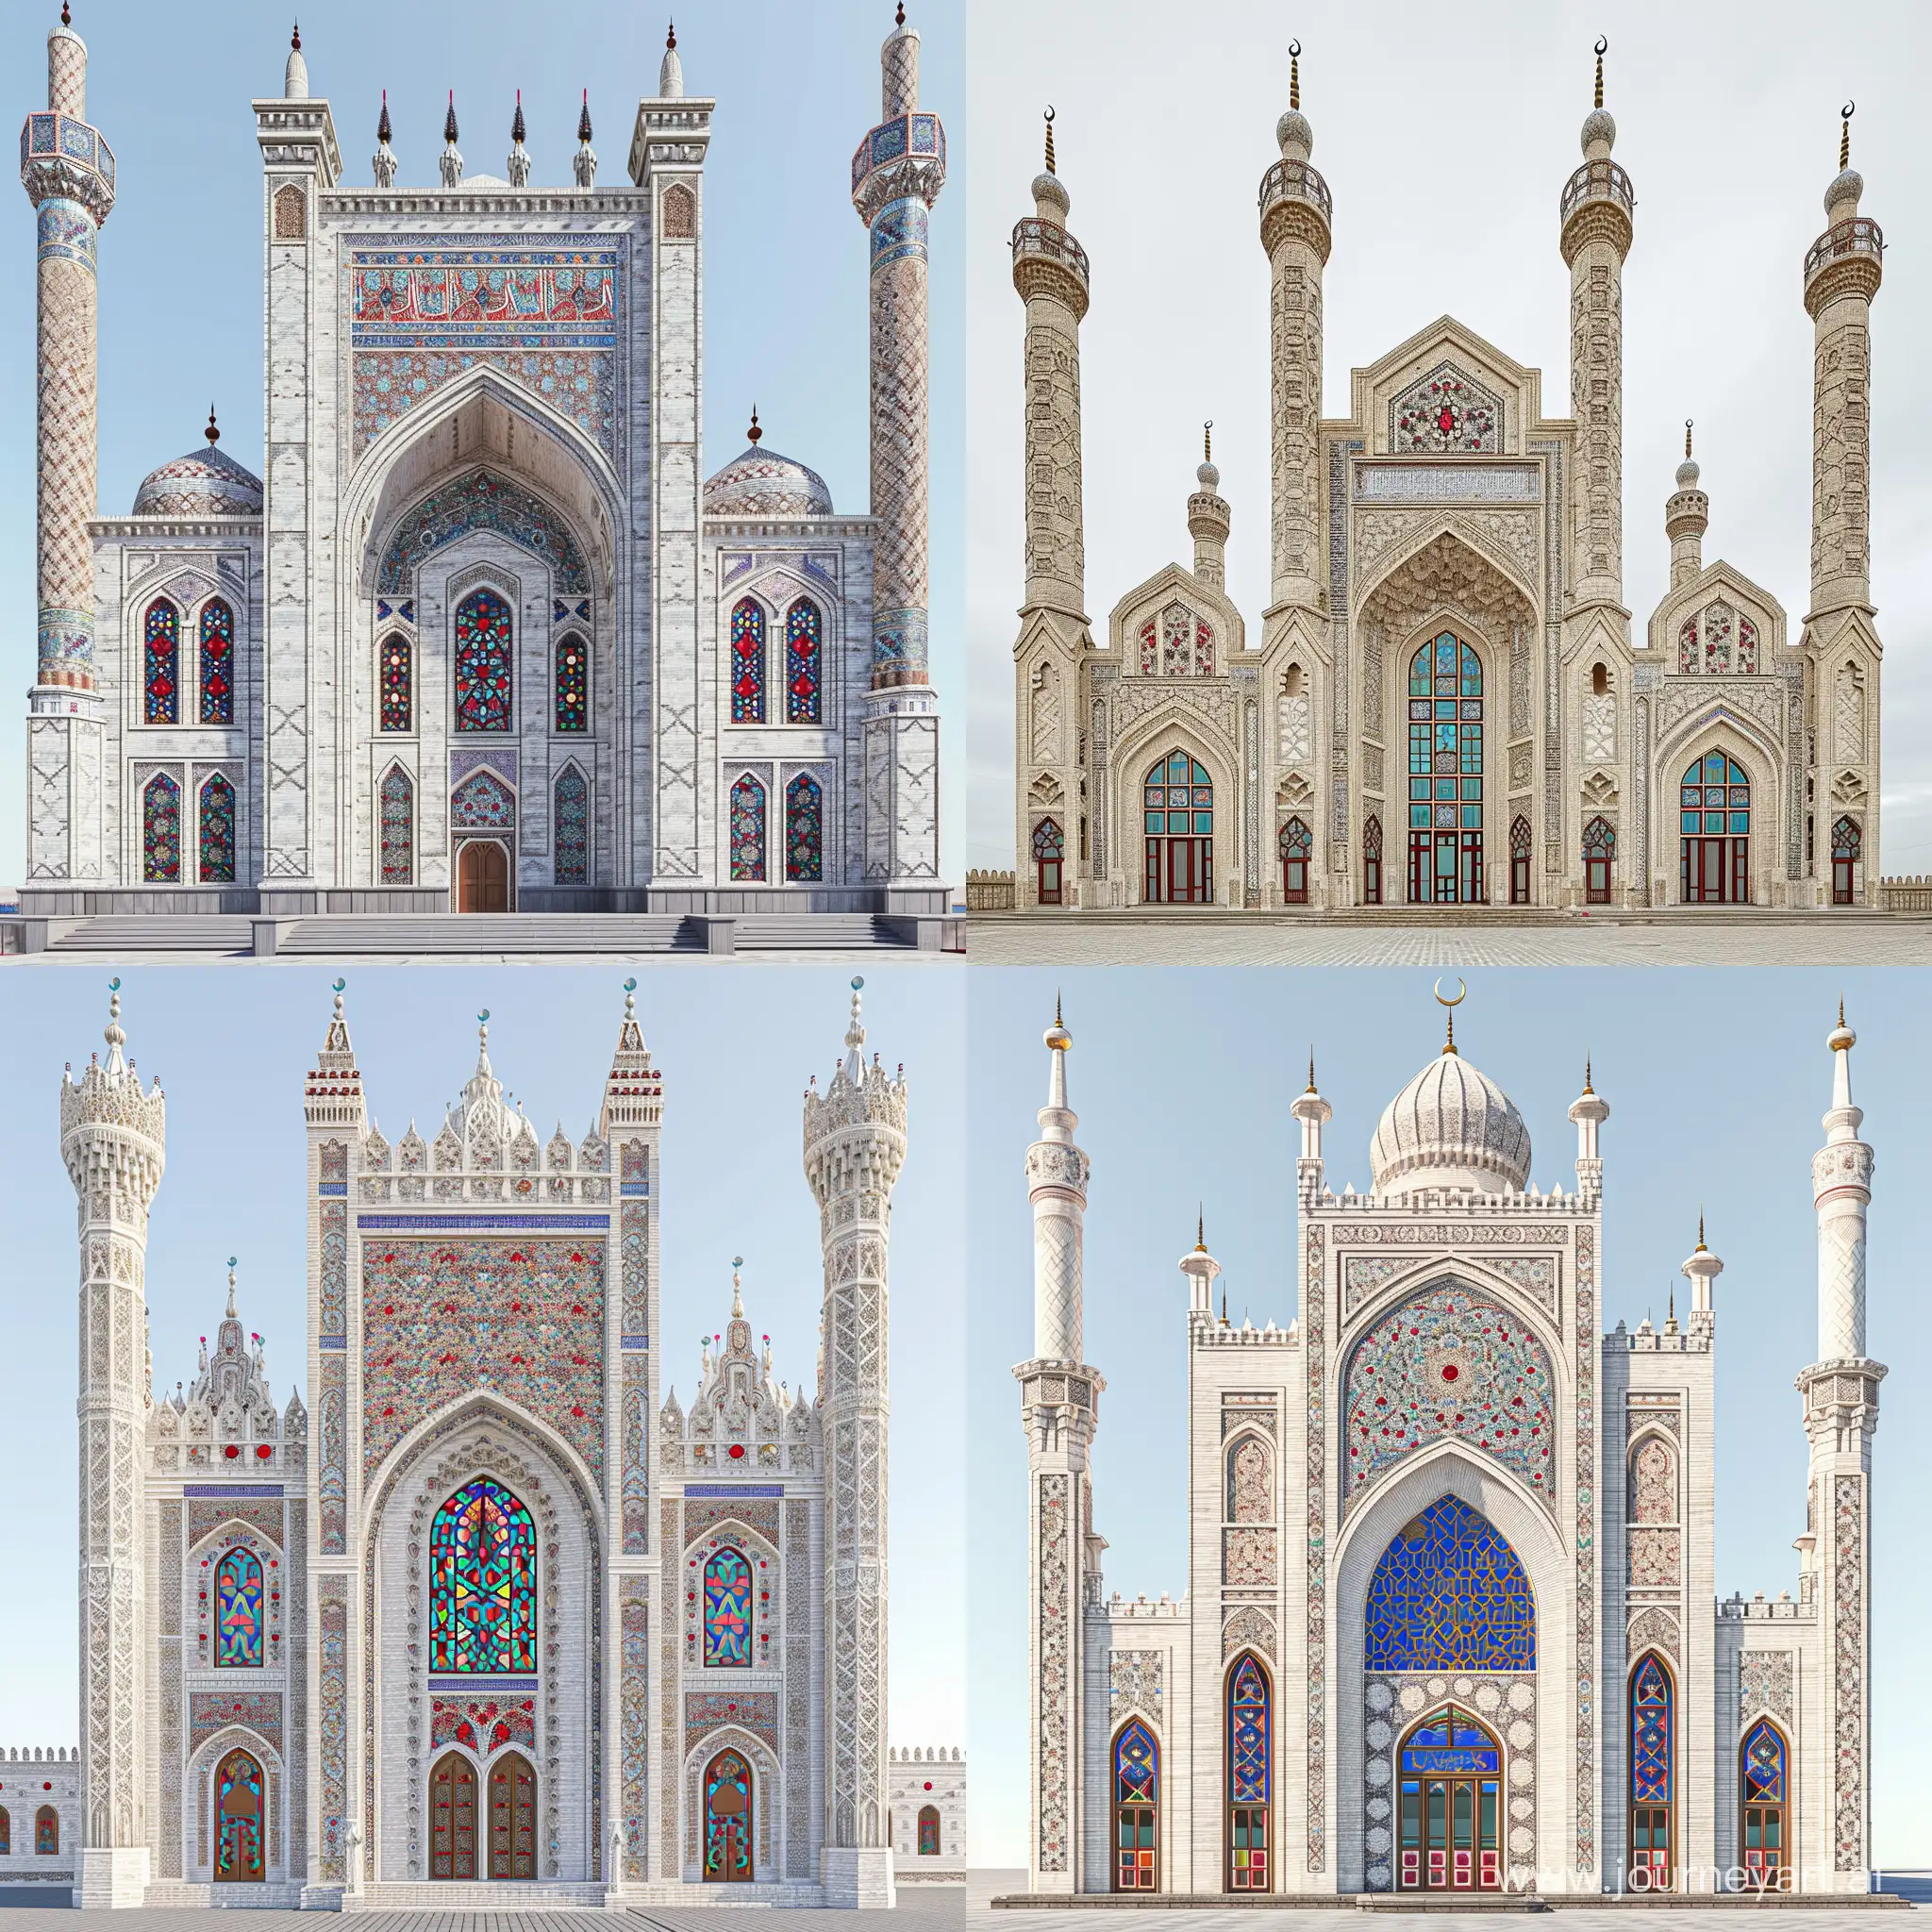 Exquisite-Uzbekistan-Style-MultiLevel-Mosque-with-Islamic-Decor